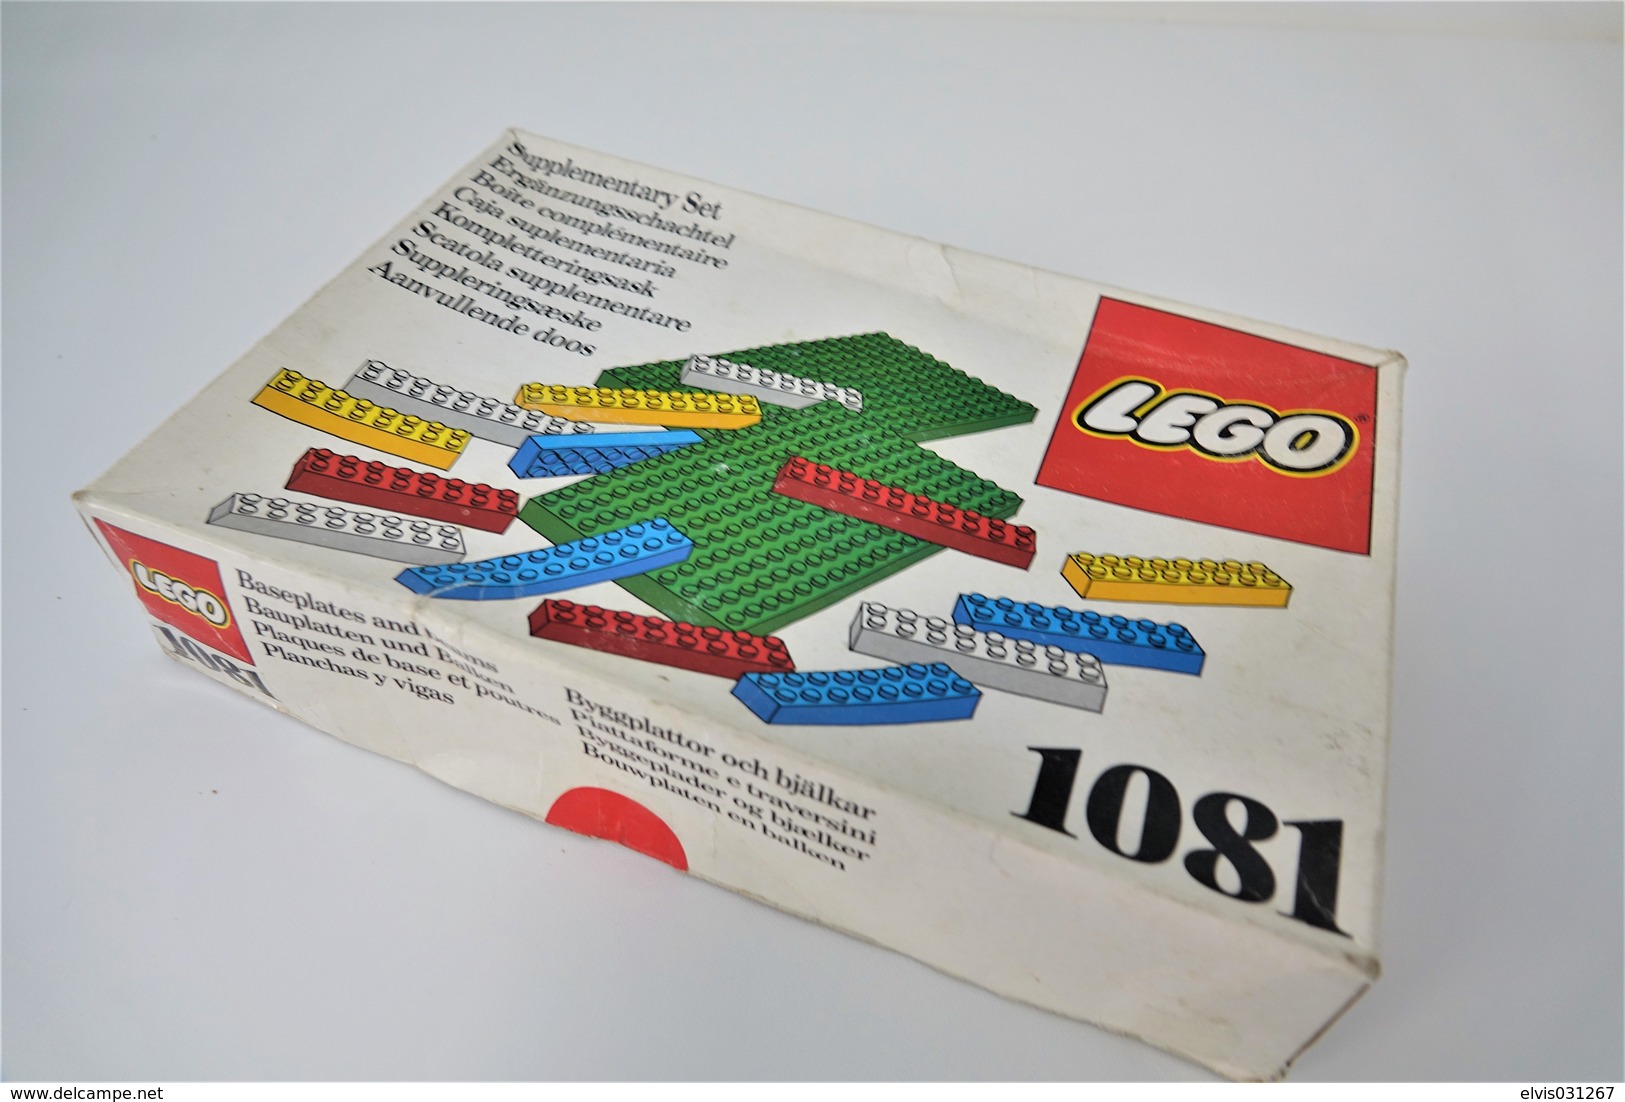 LEGO - 1081 Supplementary Box - Very Rare - Original Box - Original Lego 1976 - Vintage - Kataloge